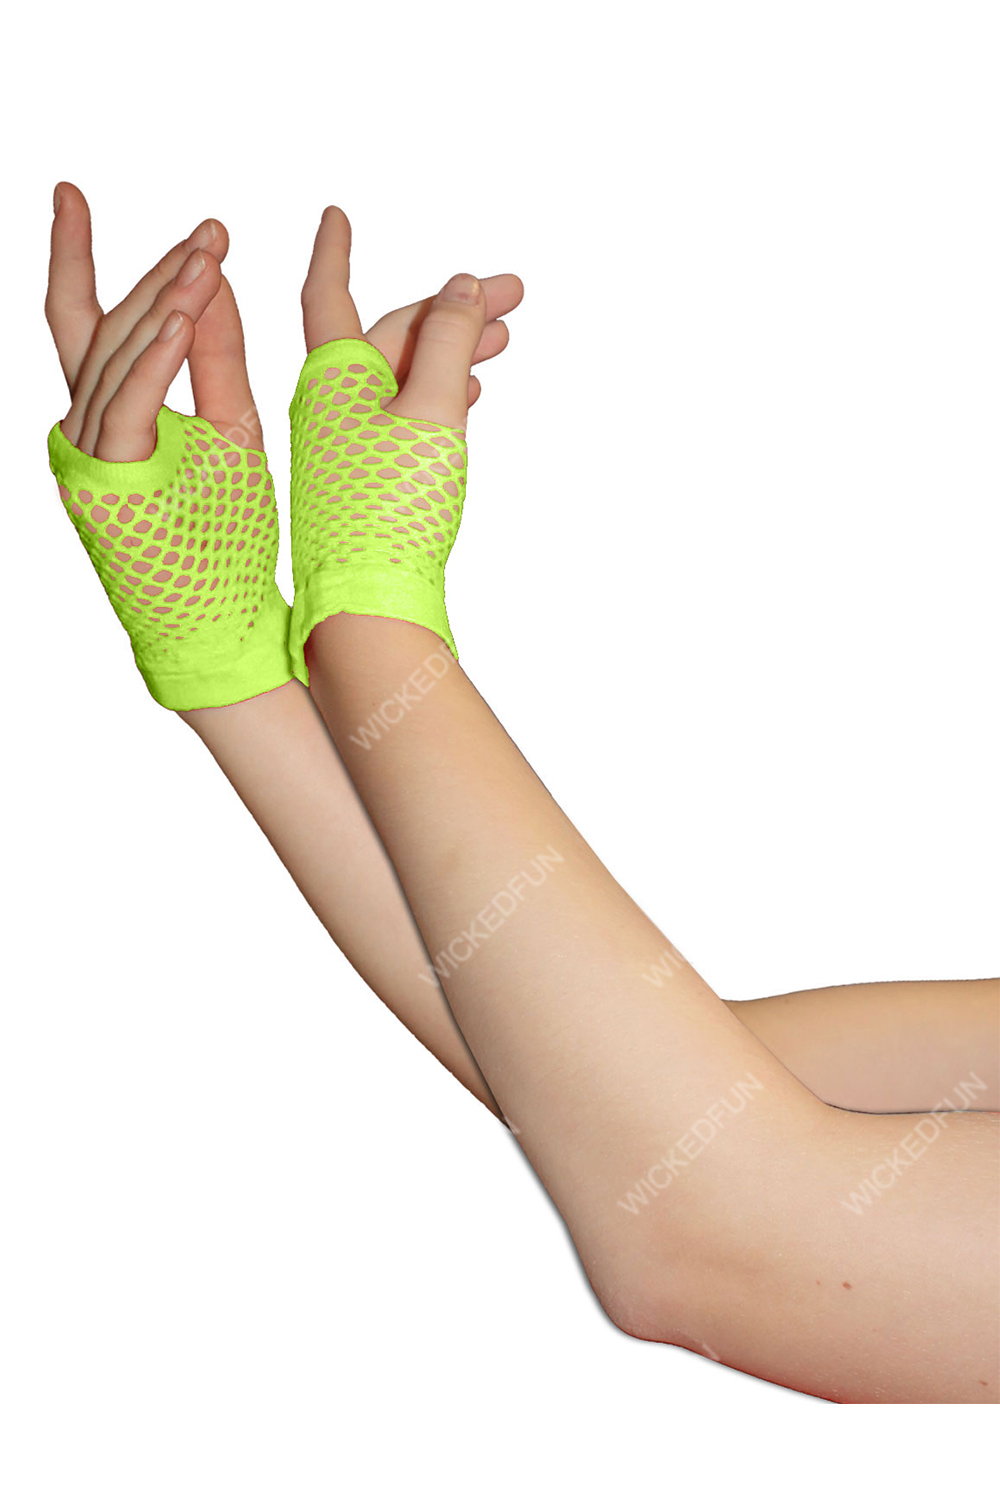 Wickedfun Green Fingerless Short Fishnet Gloves (Pack of 12 pairs)